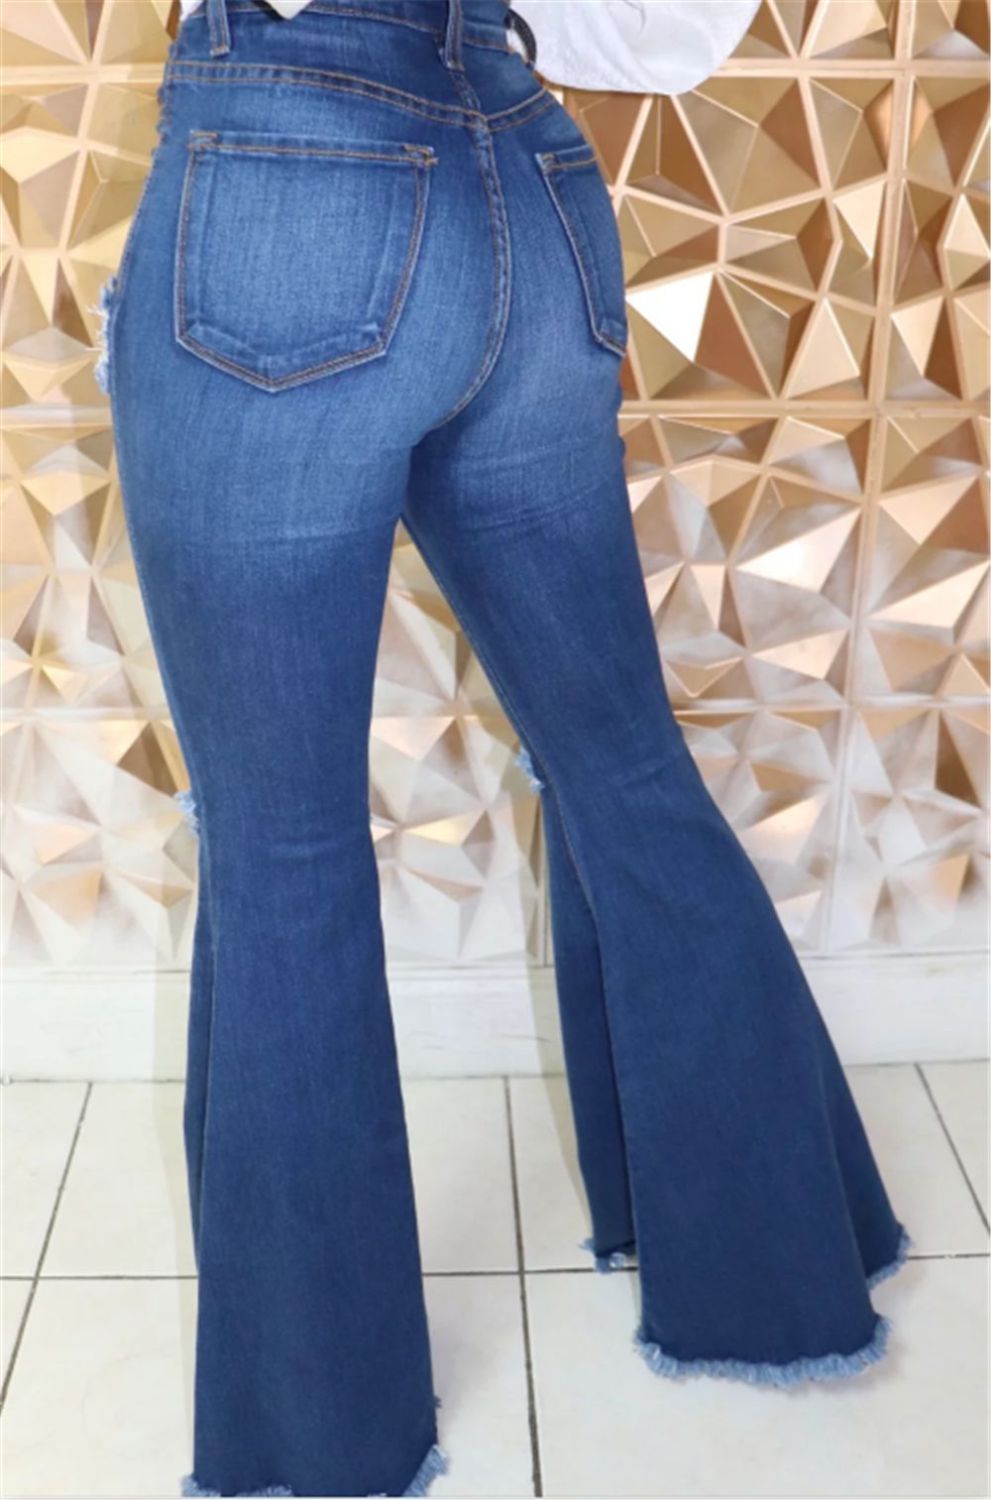 Dear-Fashion | Denim Ripped Holes Jeans High Waist Flare Pants LX-8906 ...